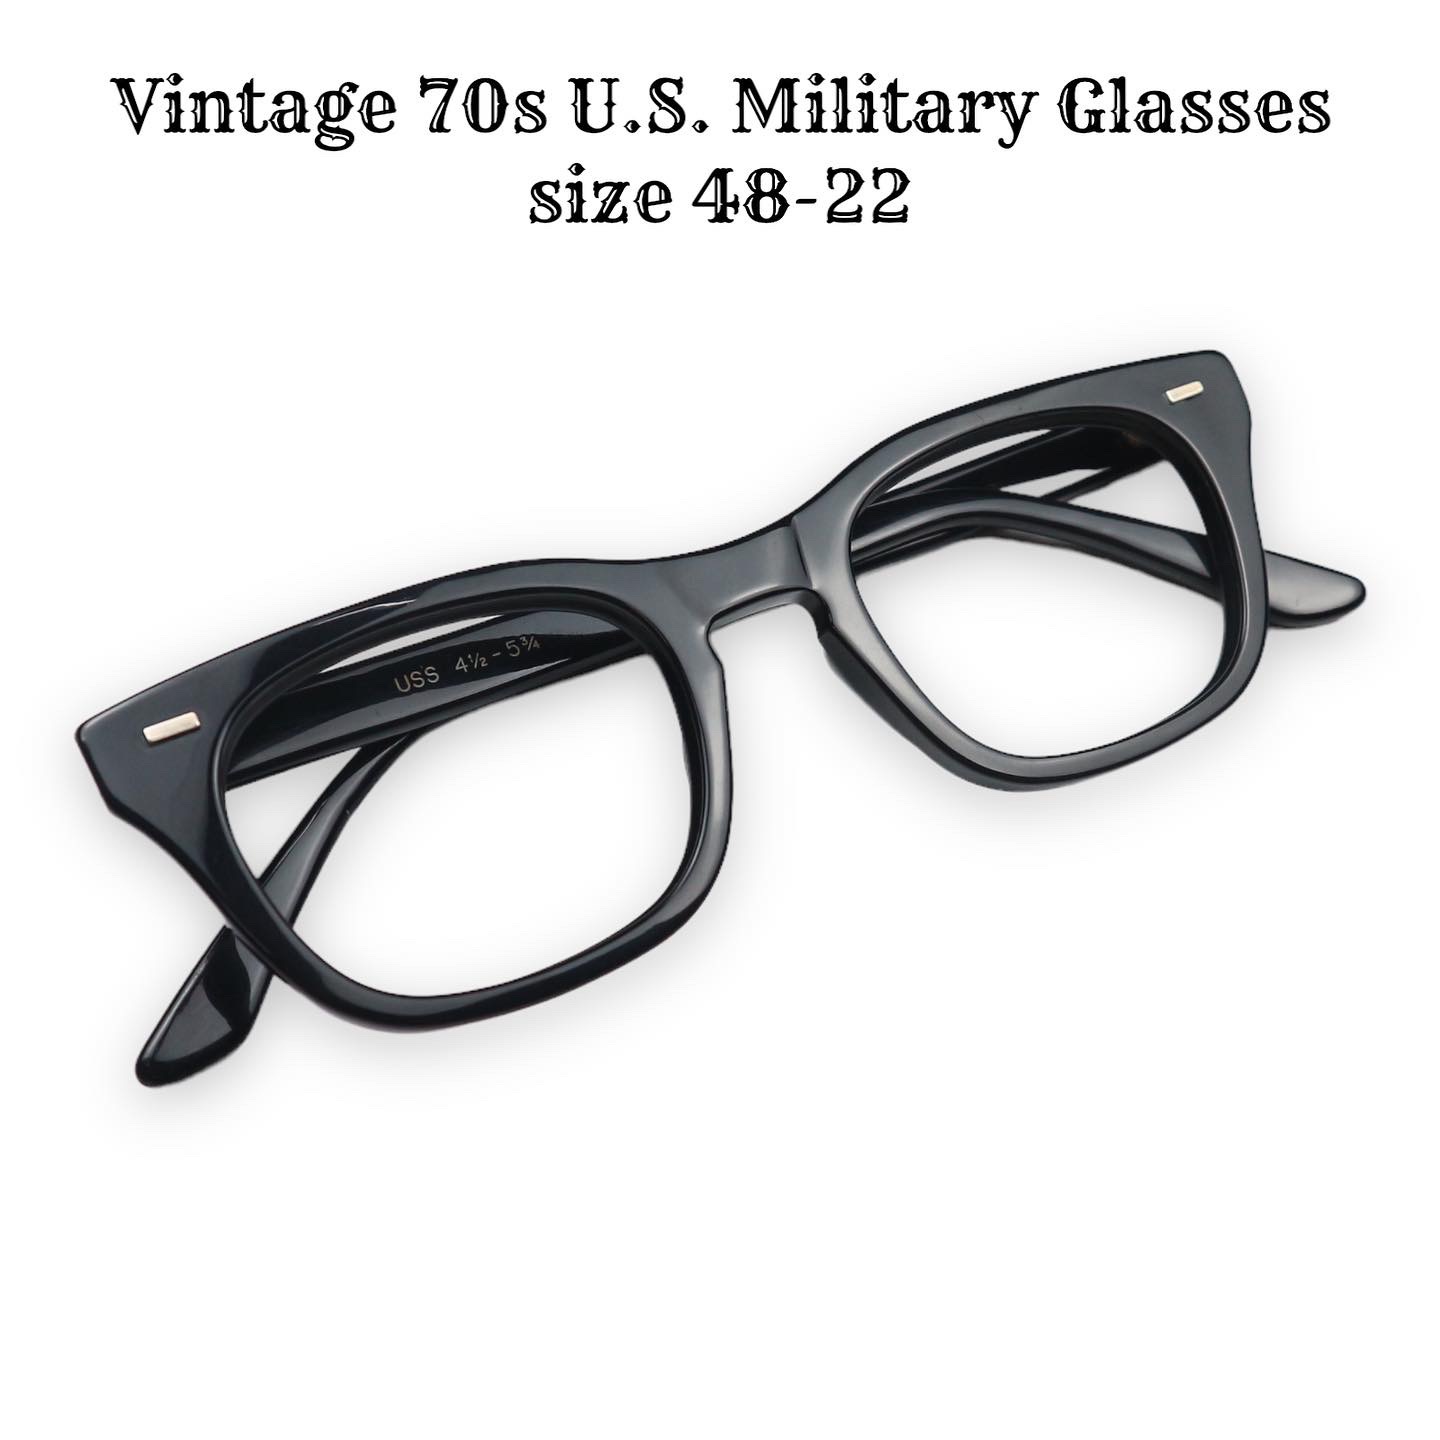 Vintage 70s U.S. Military Glasses Size 48-22